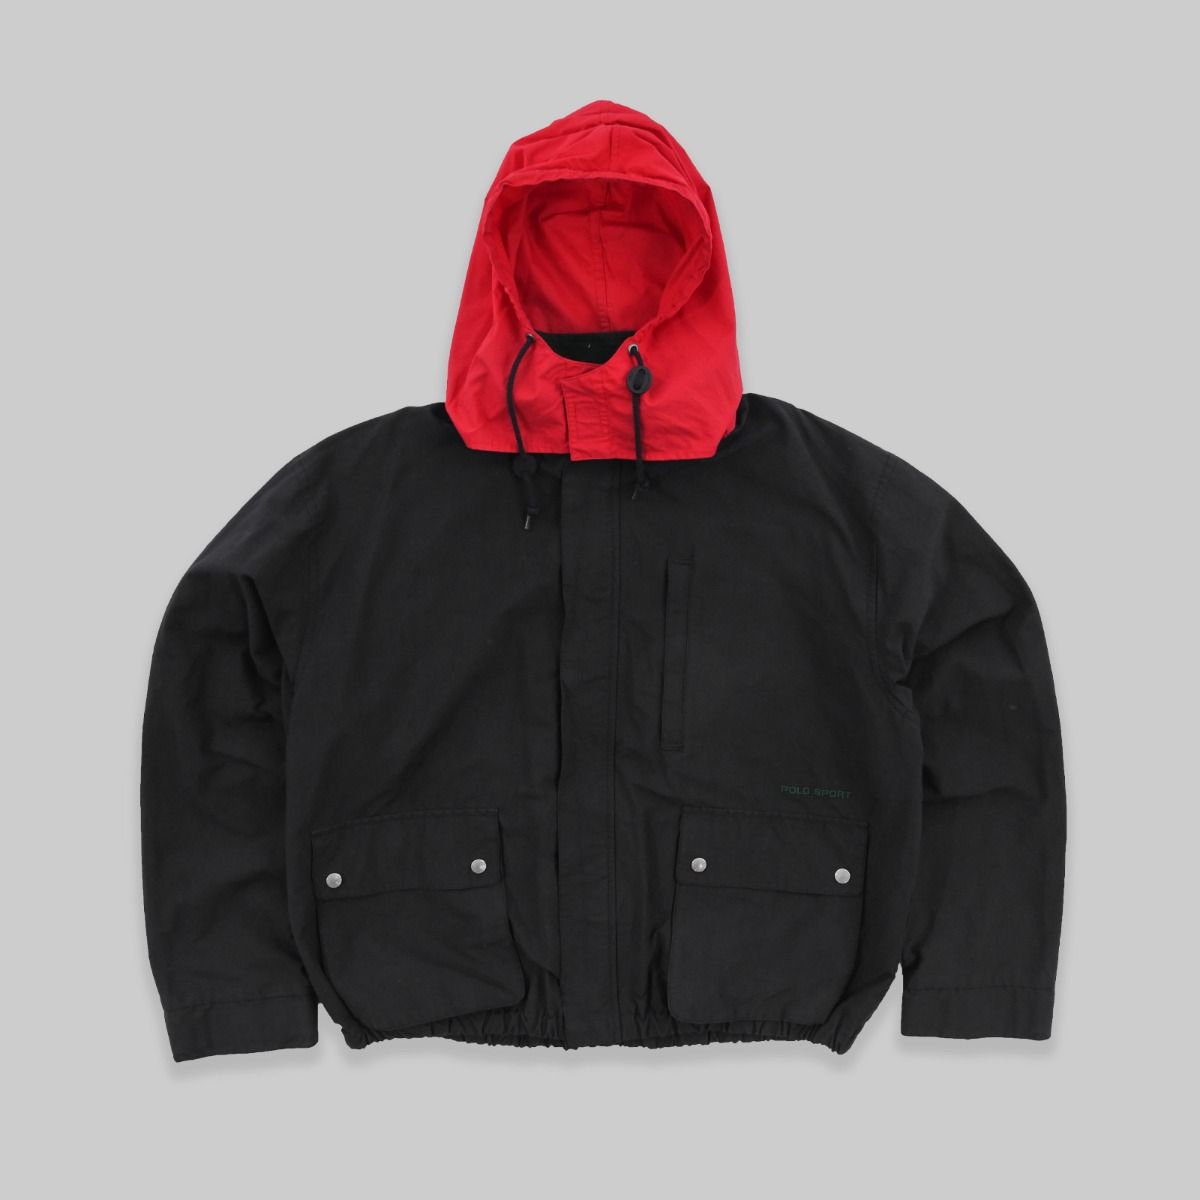 Ralph Lauren Polo Sport Jacket With Red Hood